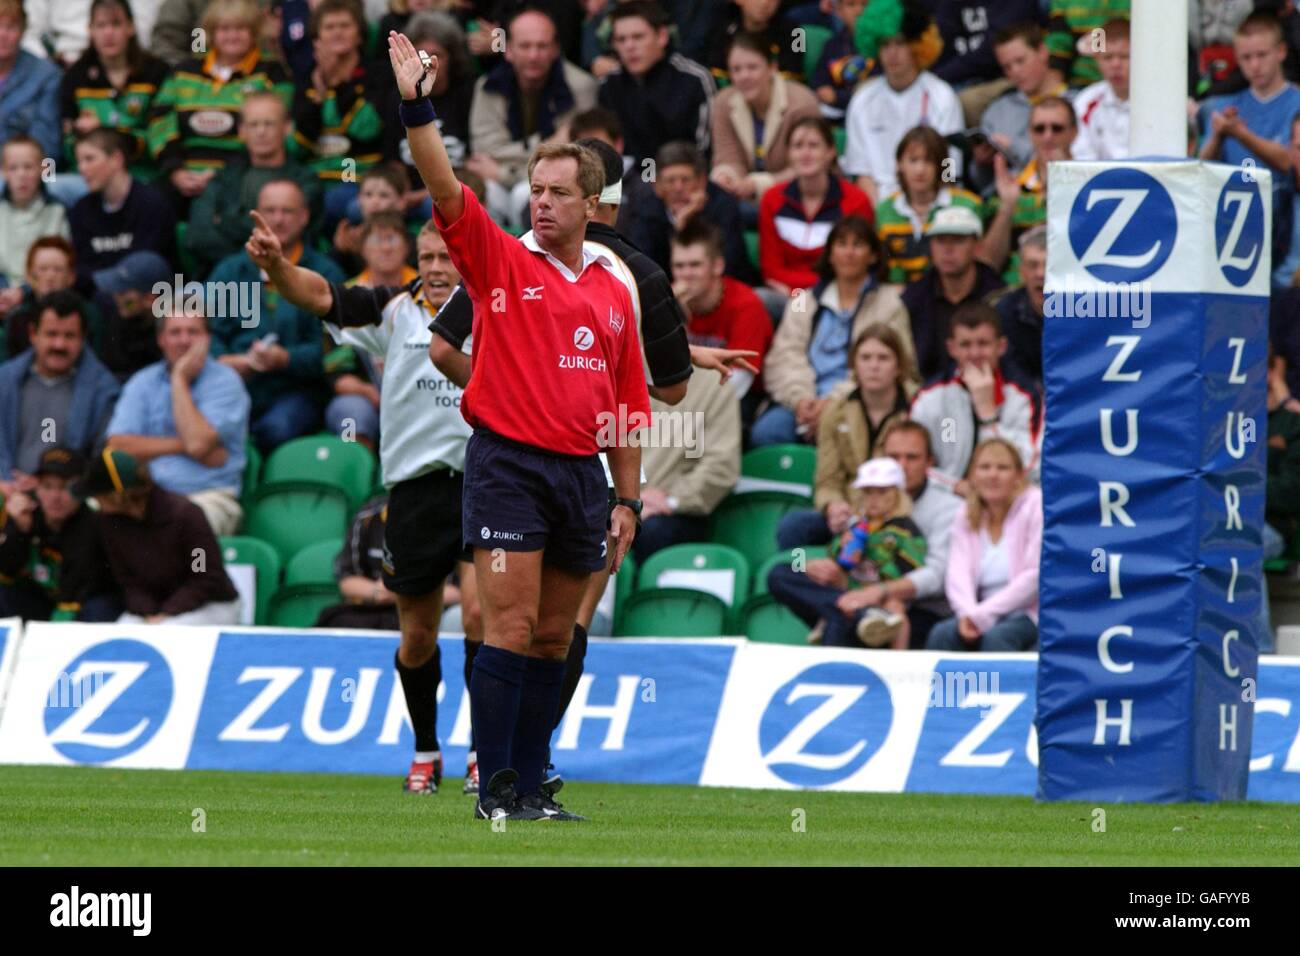 Rugby Union - Zurich Premiership - Northampton Saints v Newcastle Falcons. Referee Steve Lander Stock Photo